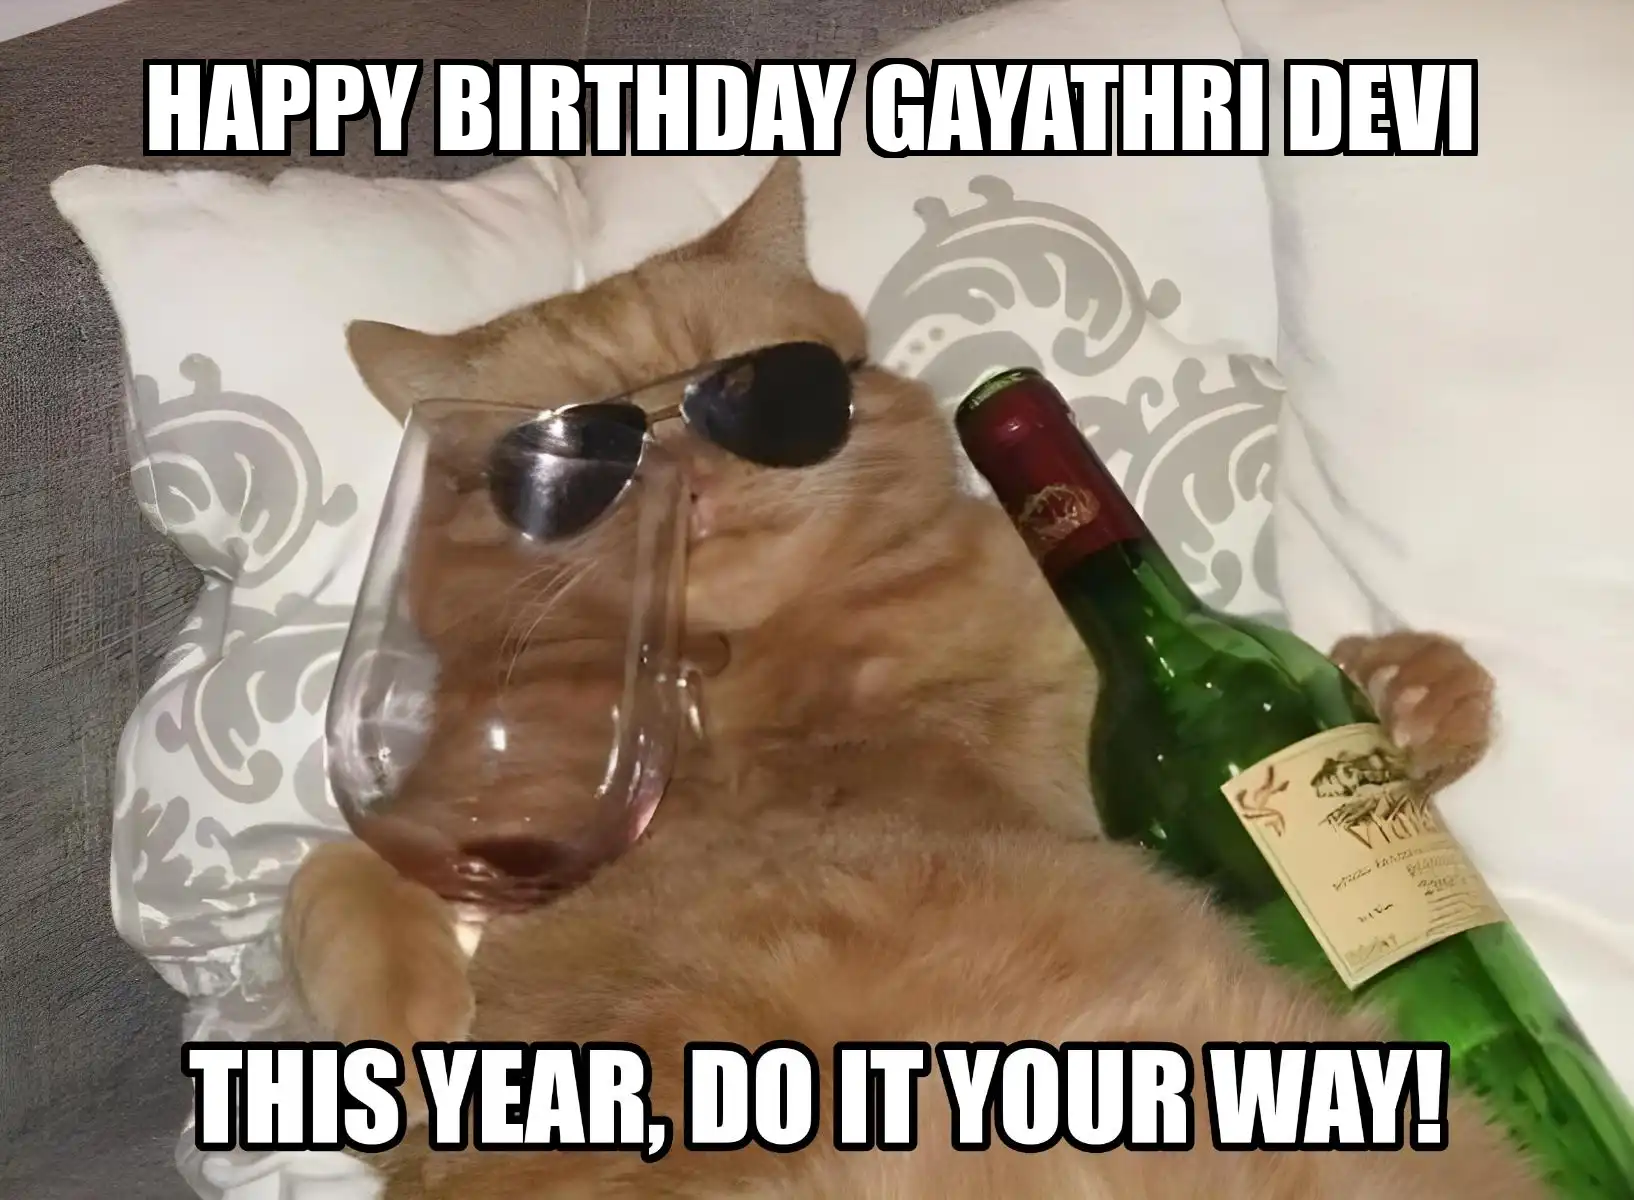 Happy Birthday Gayathri devi This Year Do It Your Way Meme